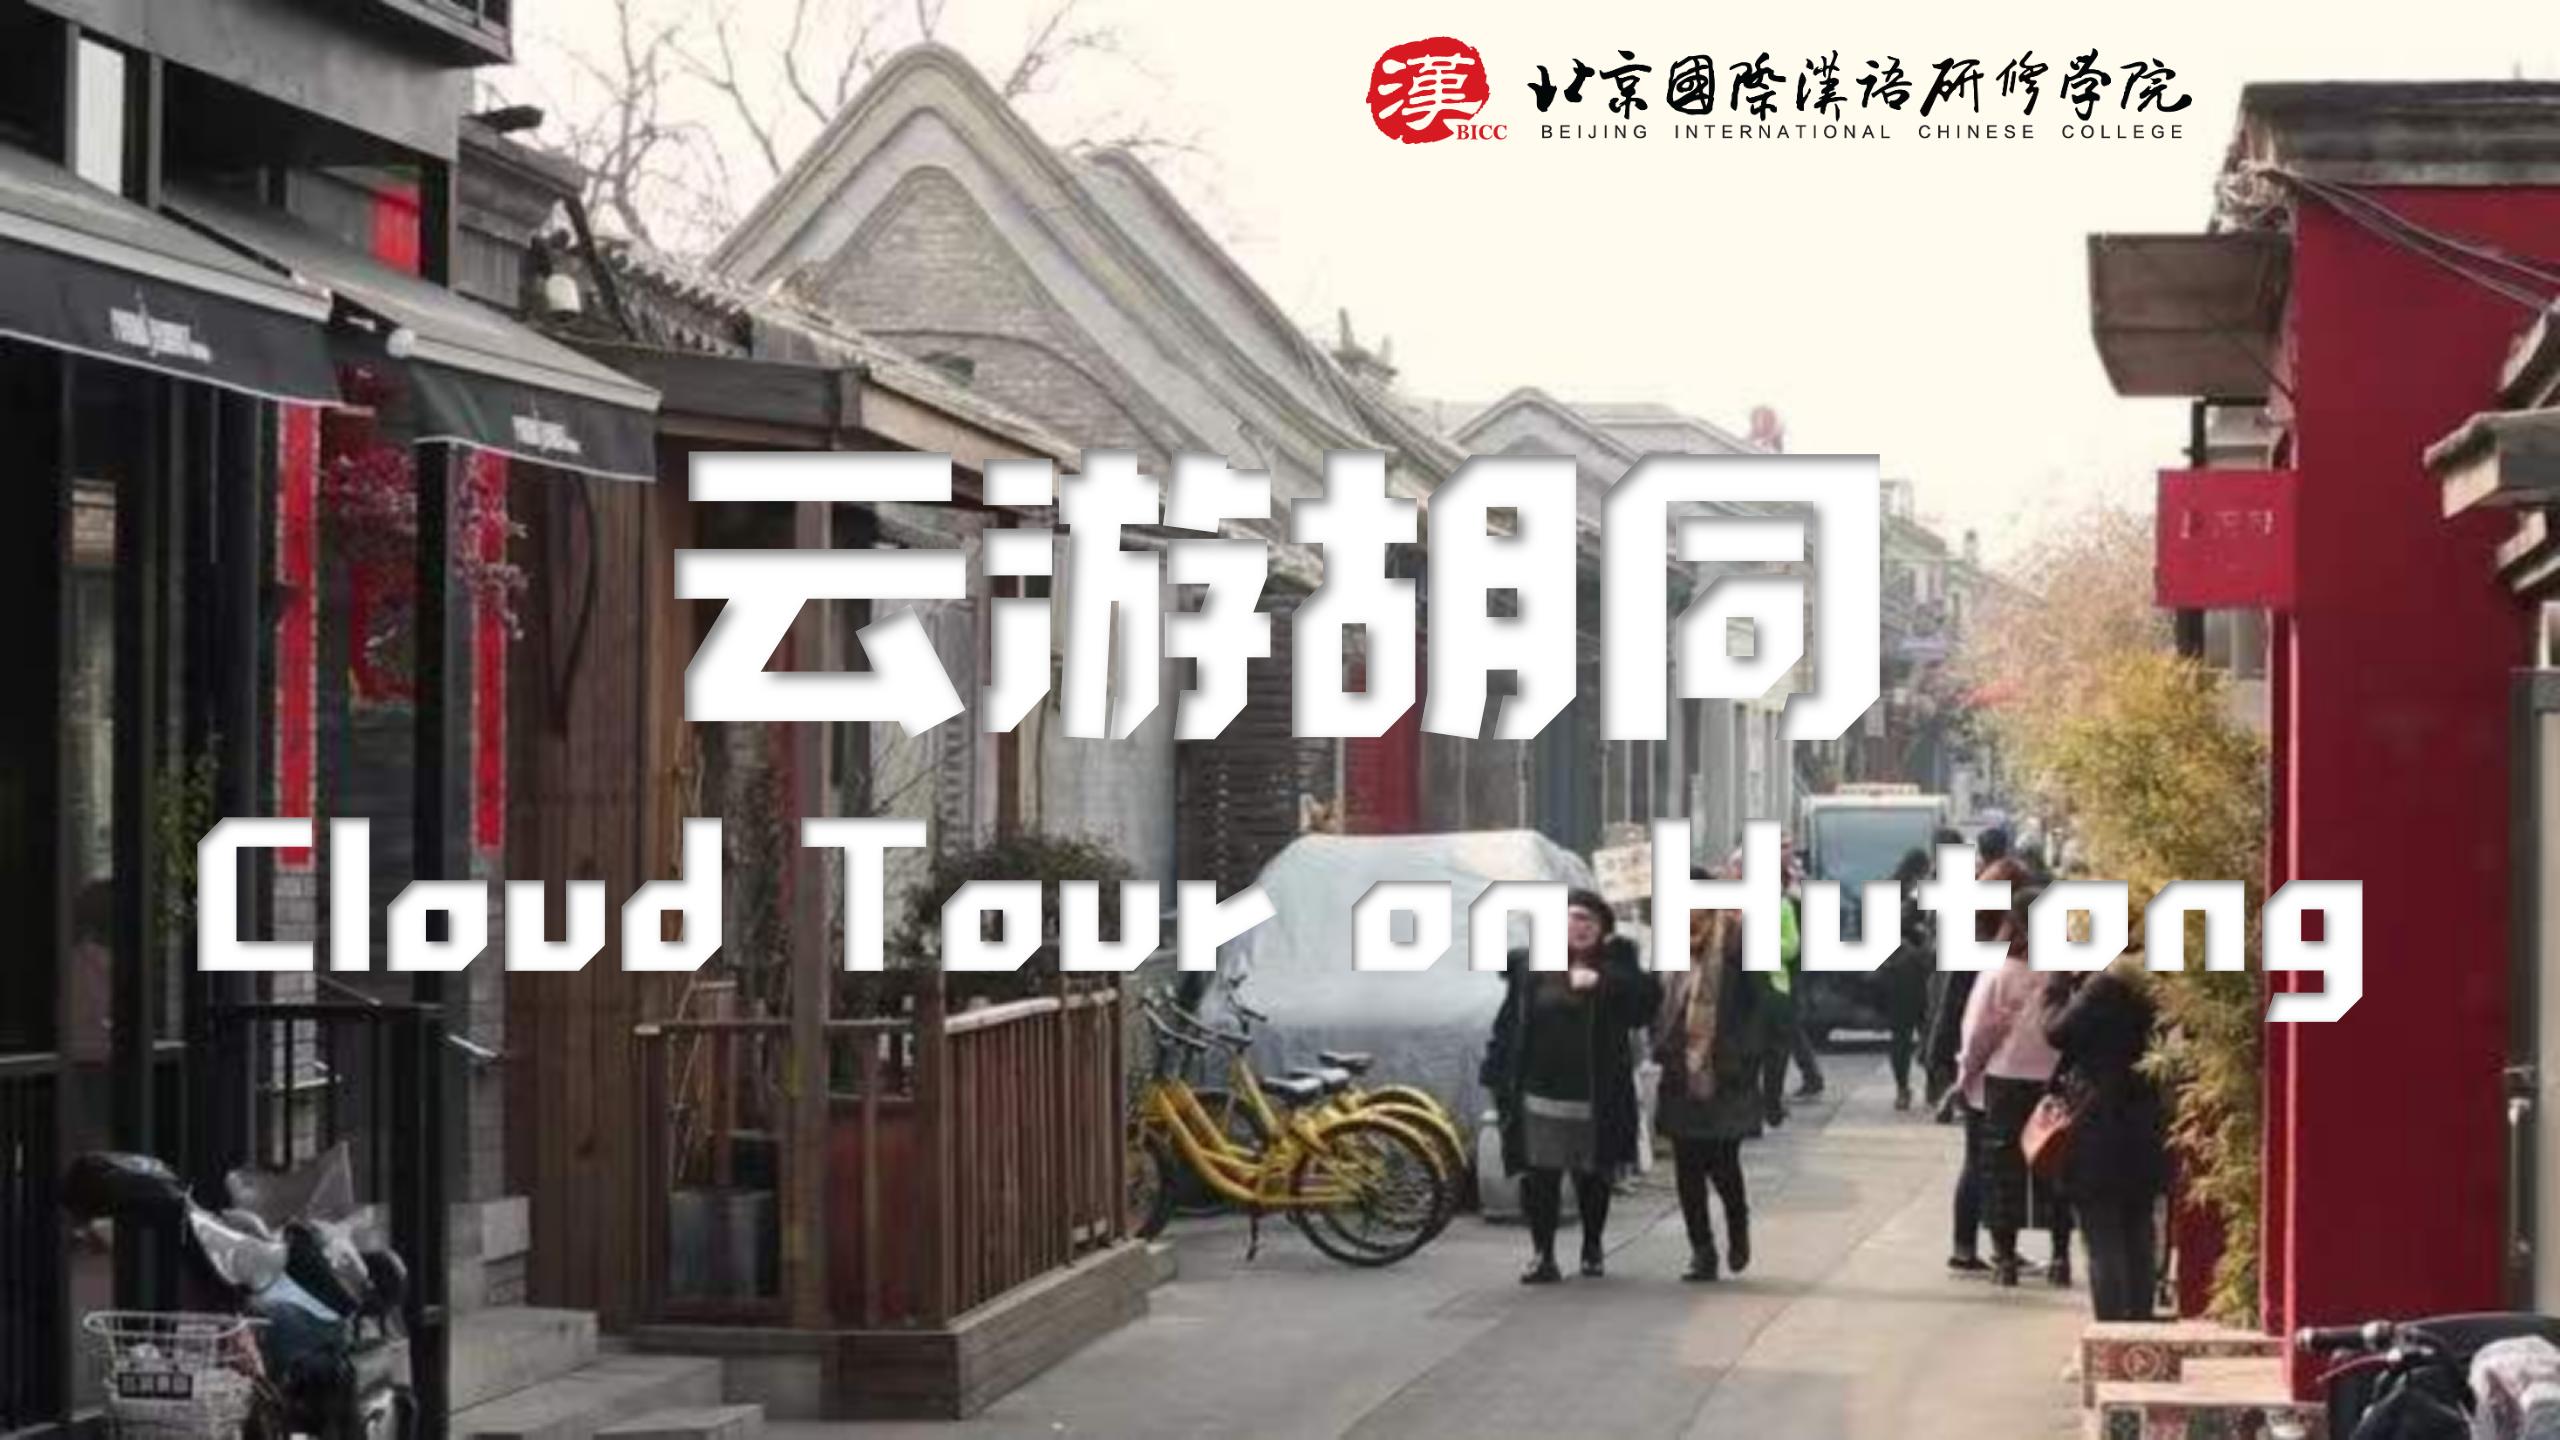 Cloud tour on Hutong